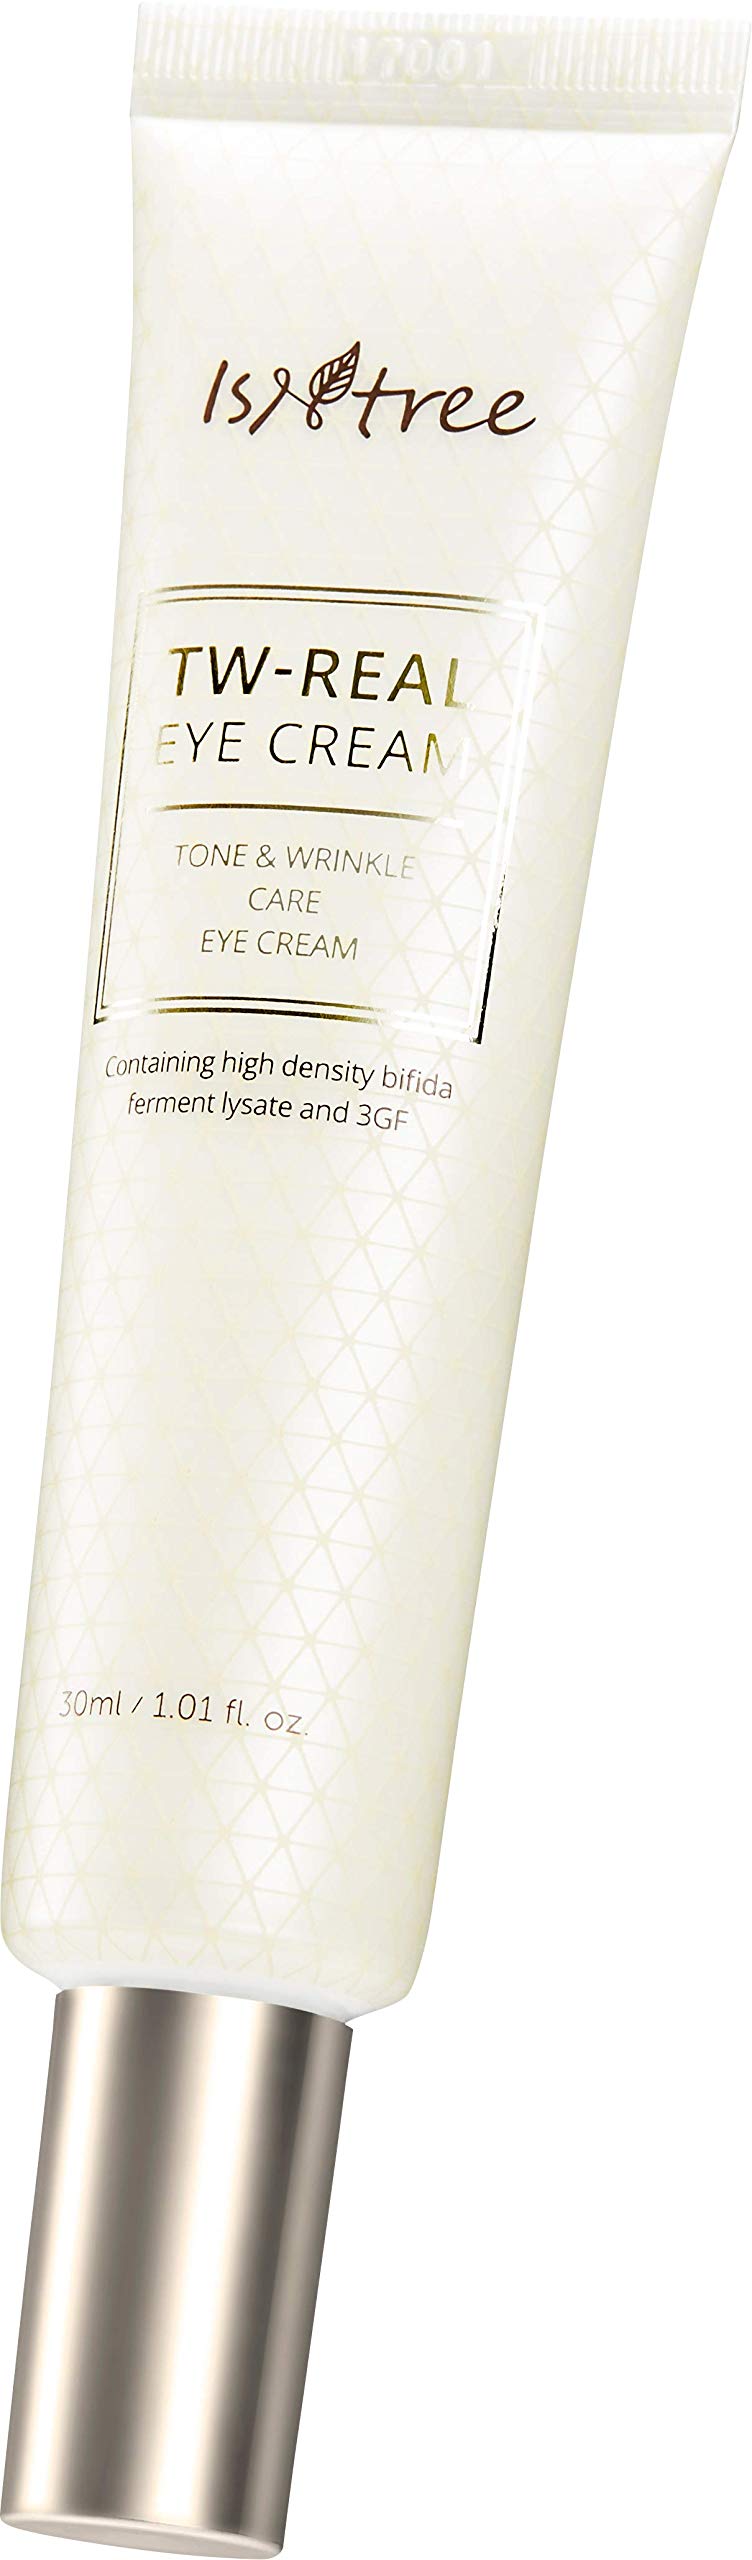 [Australia] - Isntree TW-REAL Eye Cream Korean Eye Cream for Dark Circles, Bags Under Eyes 1.01 fl. oz. - Treatment Care - Reduce Fine Lines, Puffiness, Dryness - Dull Spots Under Eye 